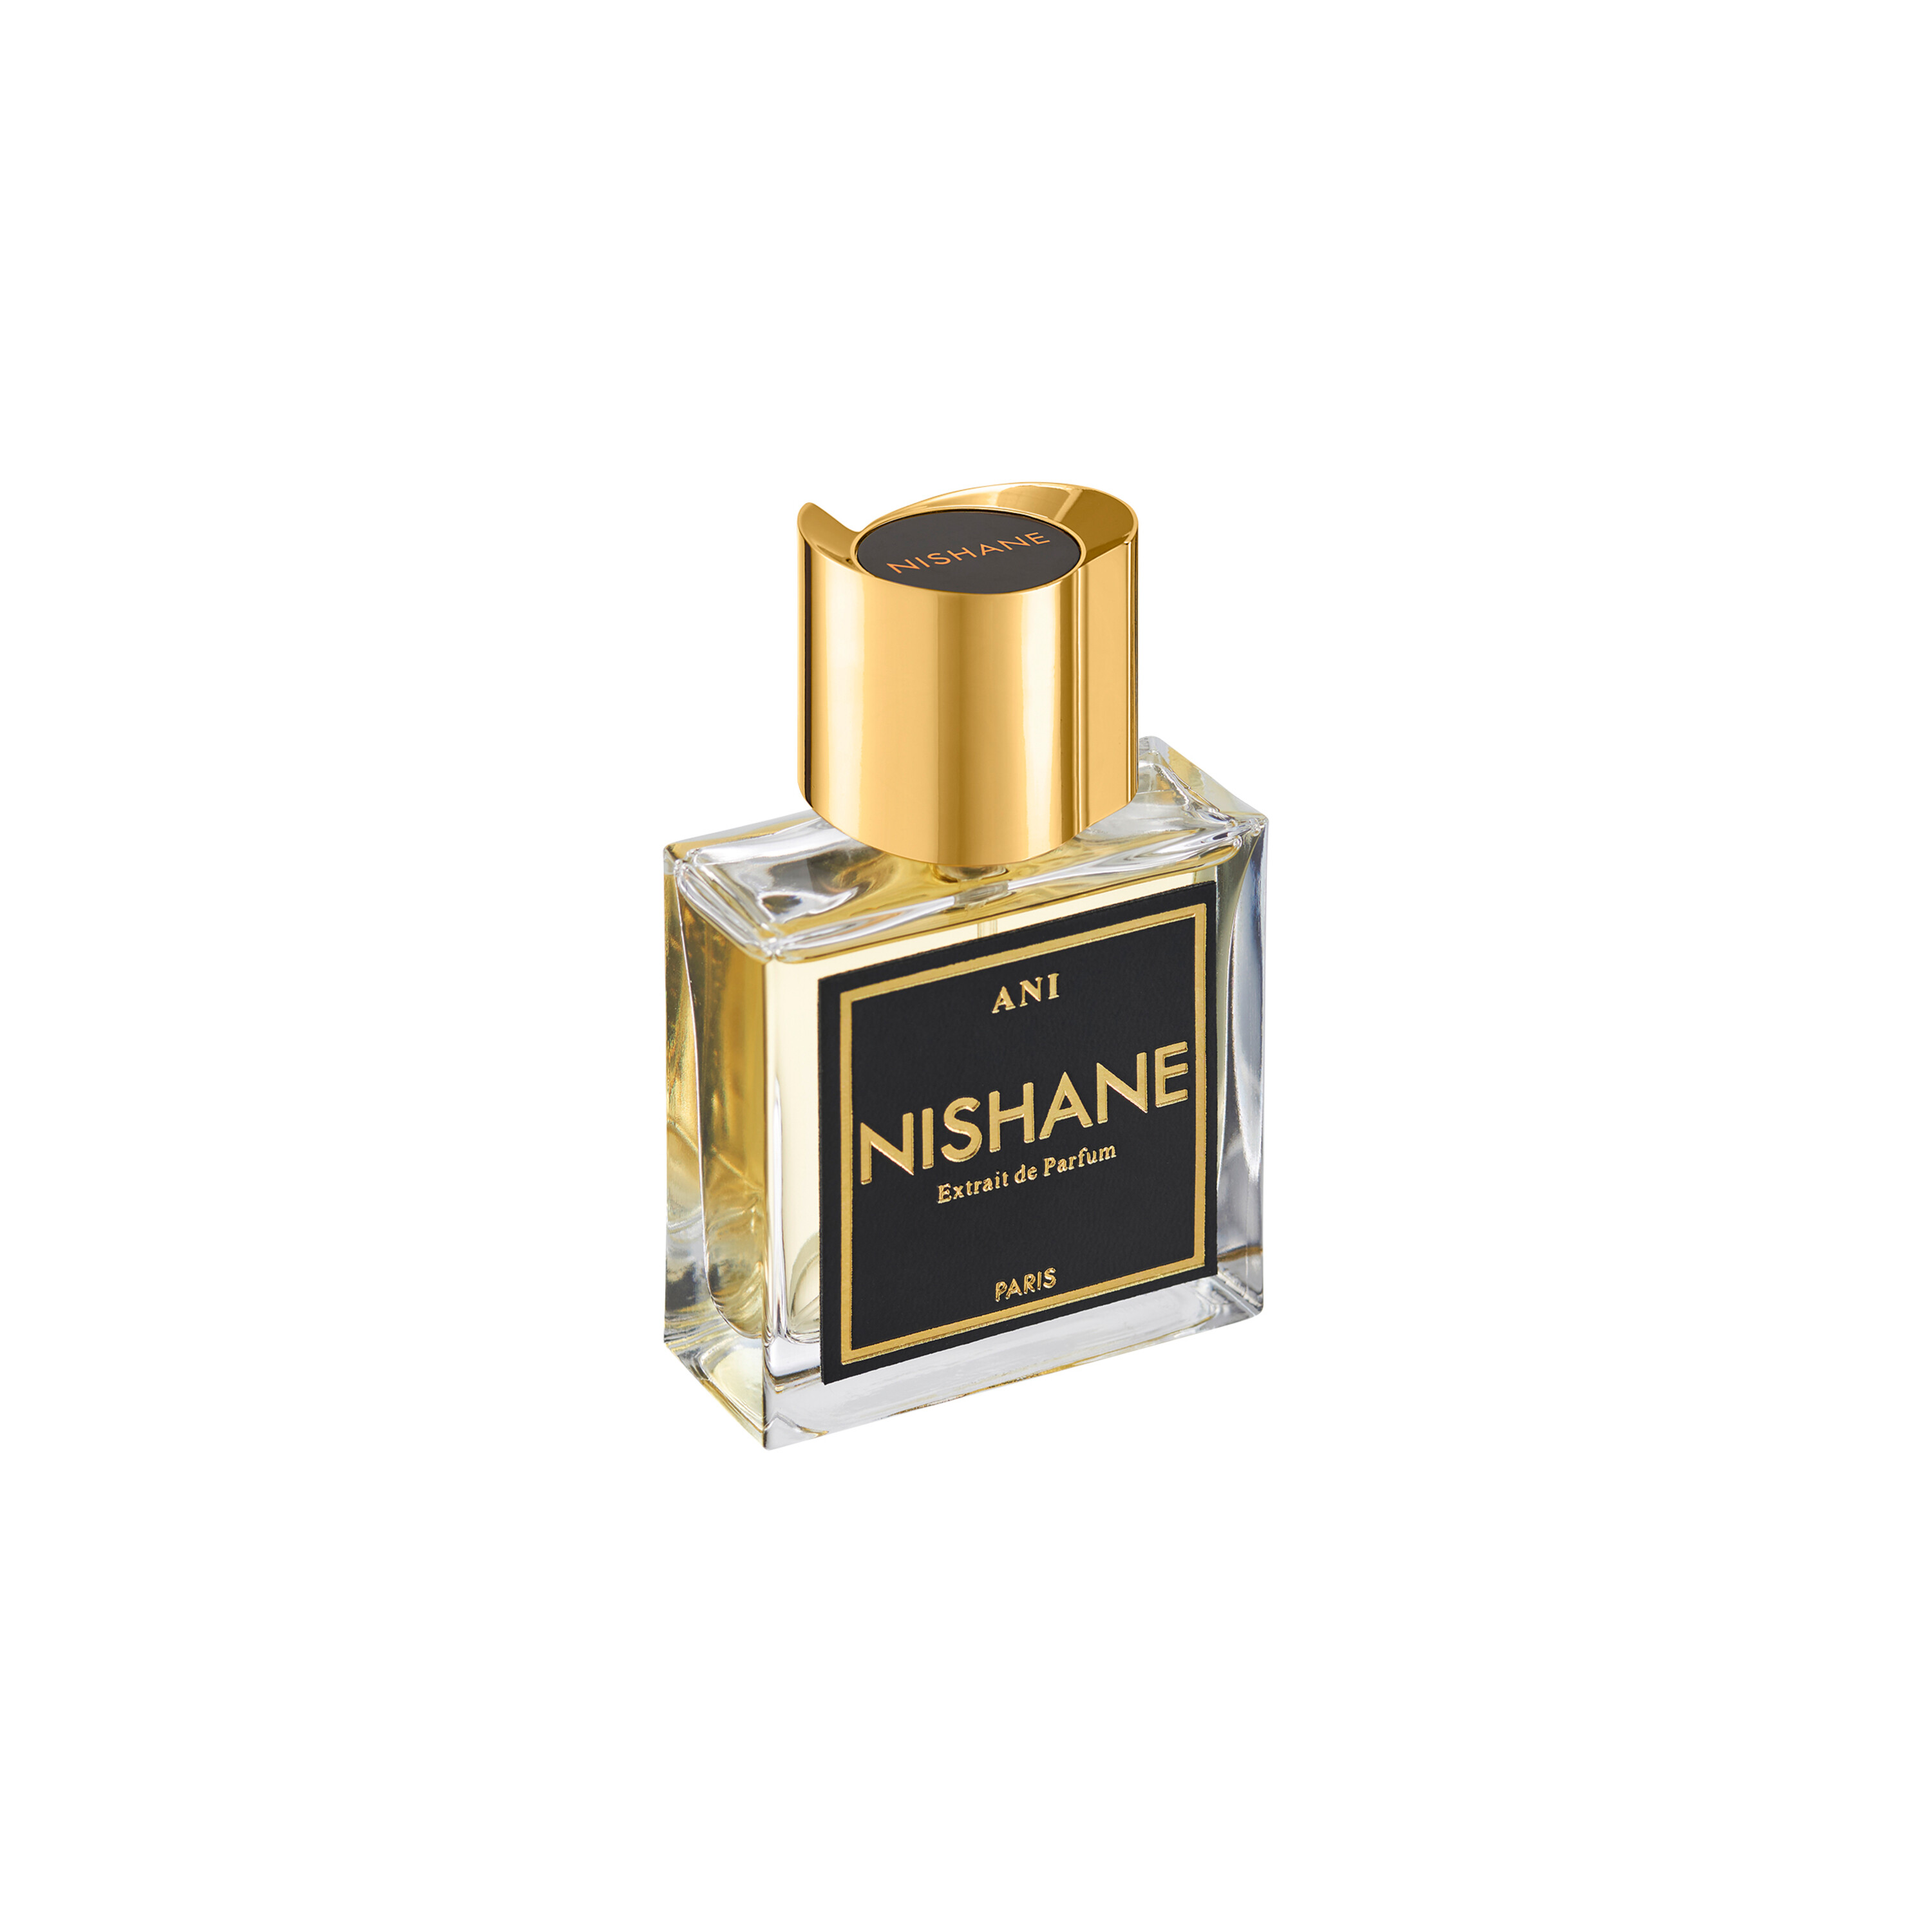 NISHANE ANI Extrait de Parfum 50ml